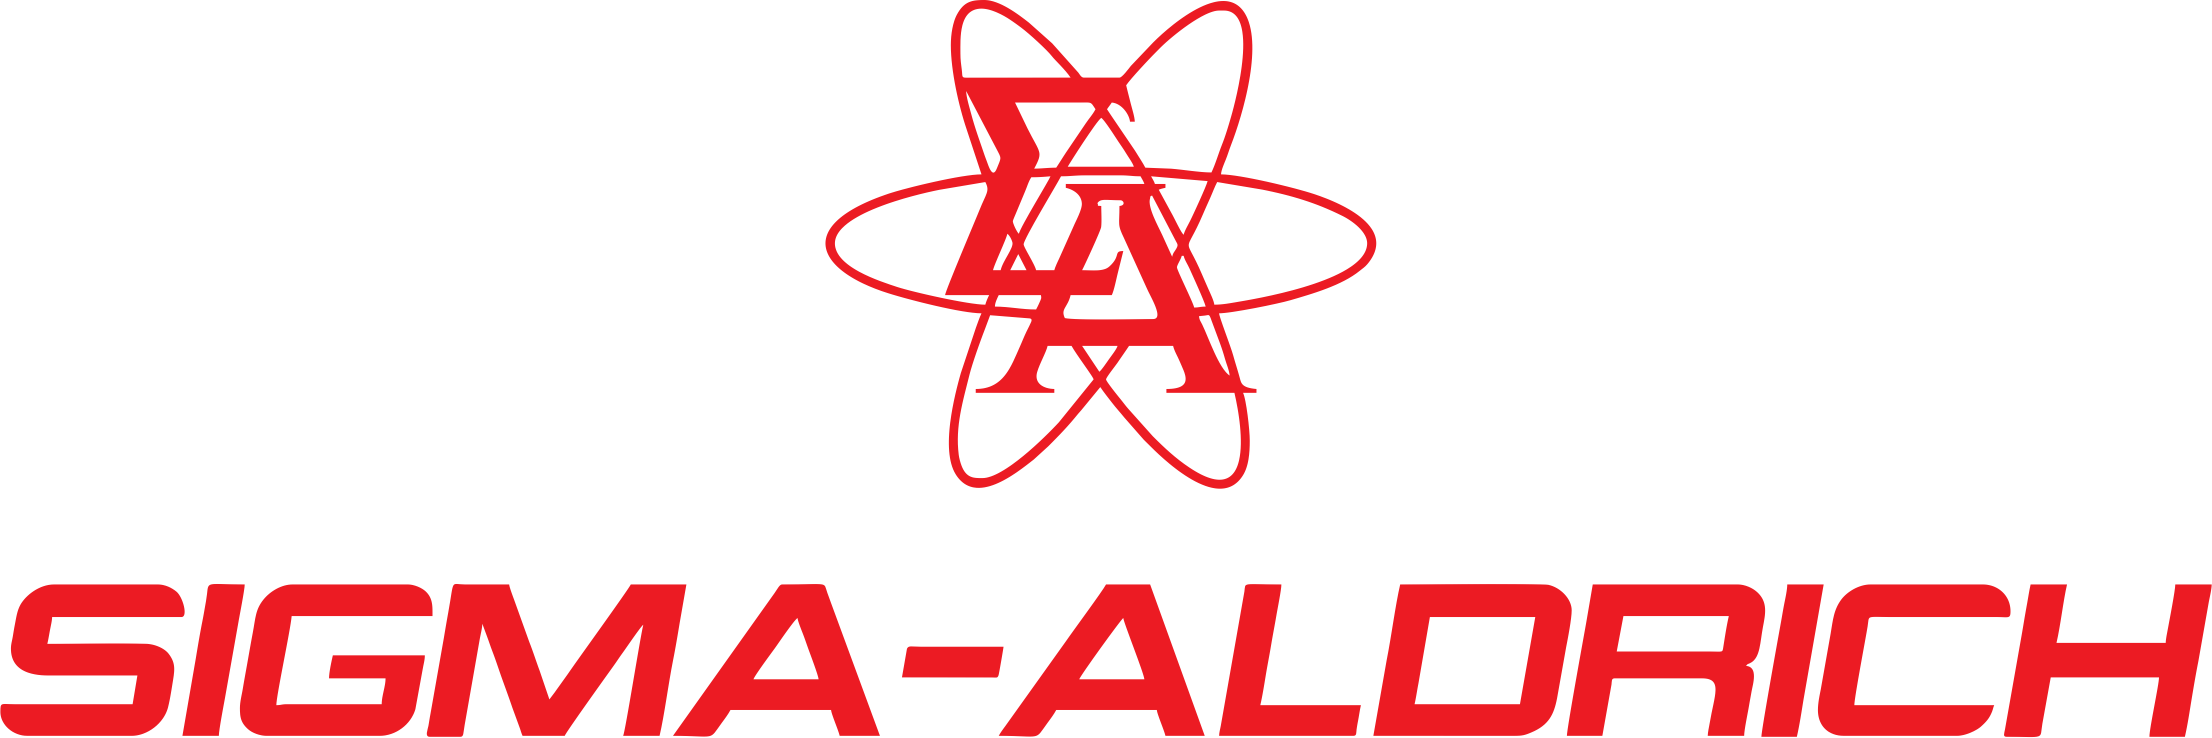 Sigma-Aldrich-Logo